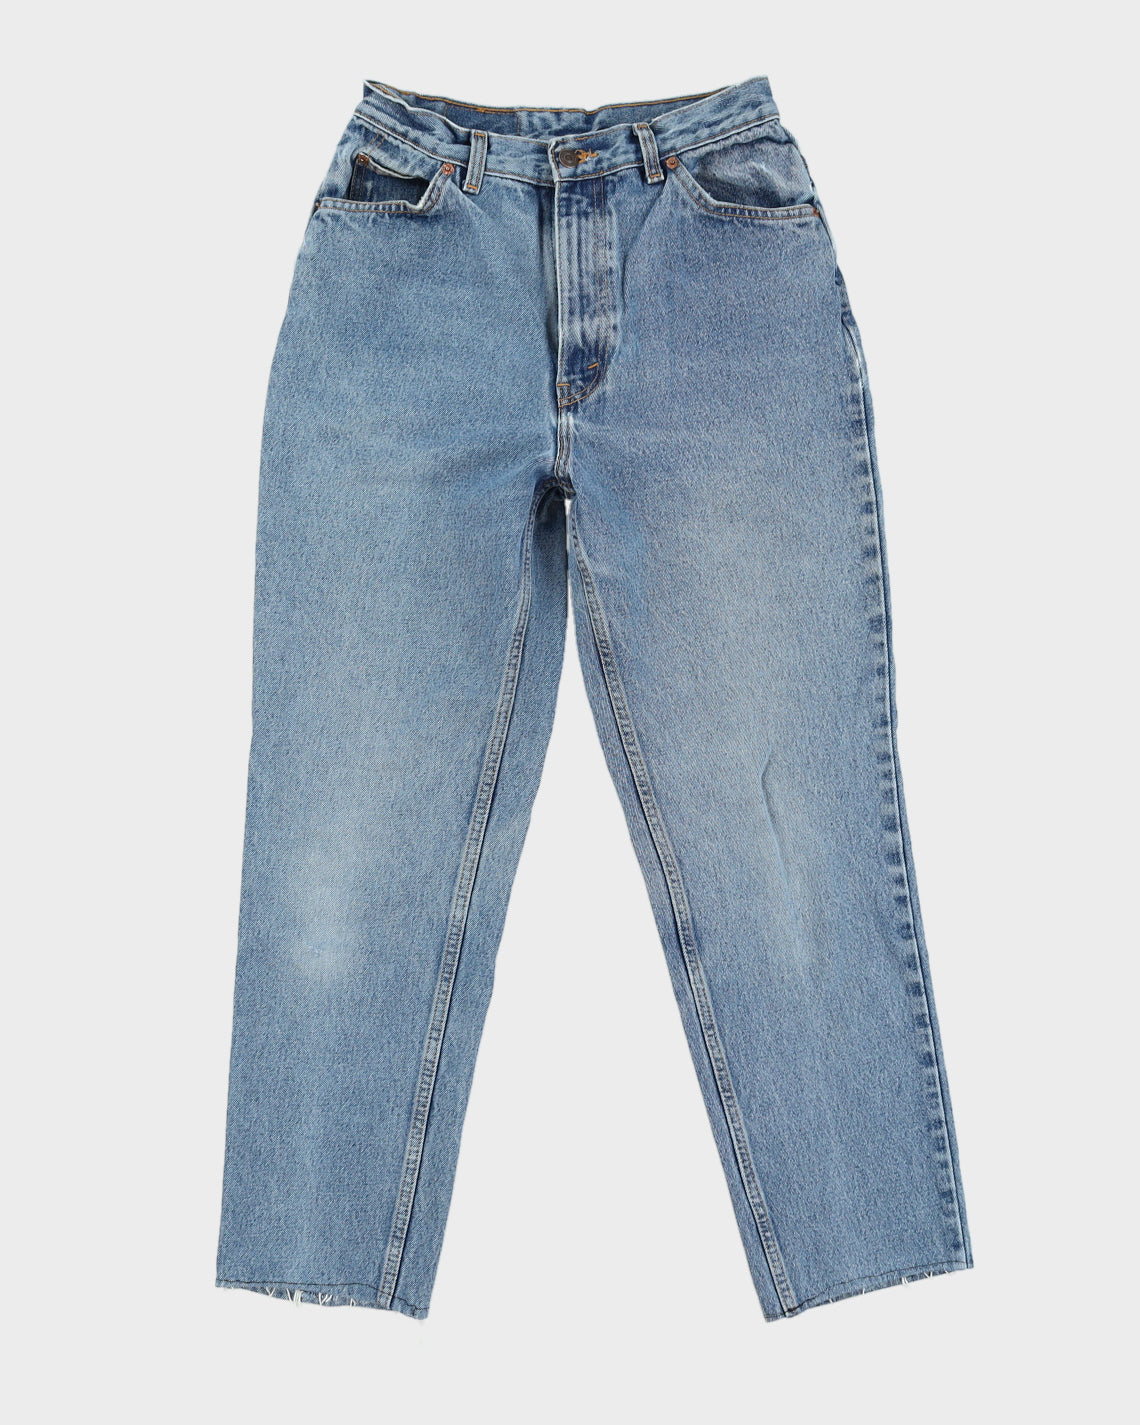 Vintage 80s Levi's Orange Tab Blue Jeans - W28 L28